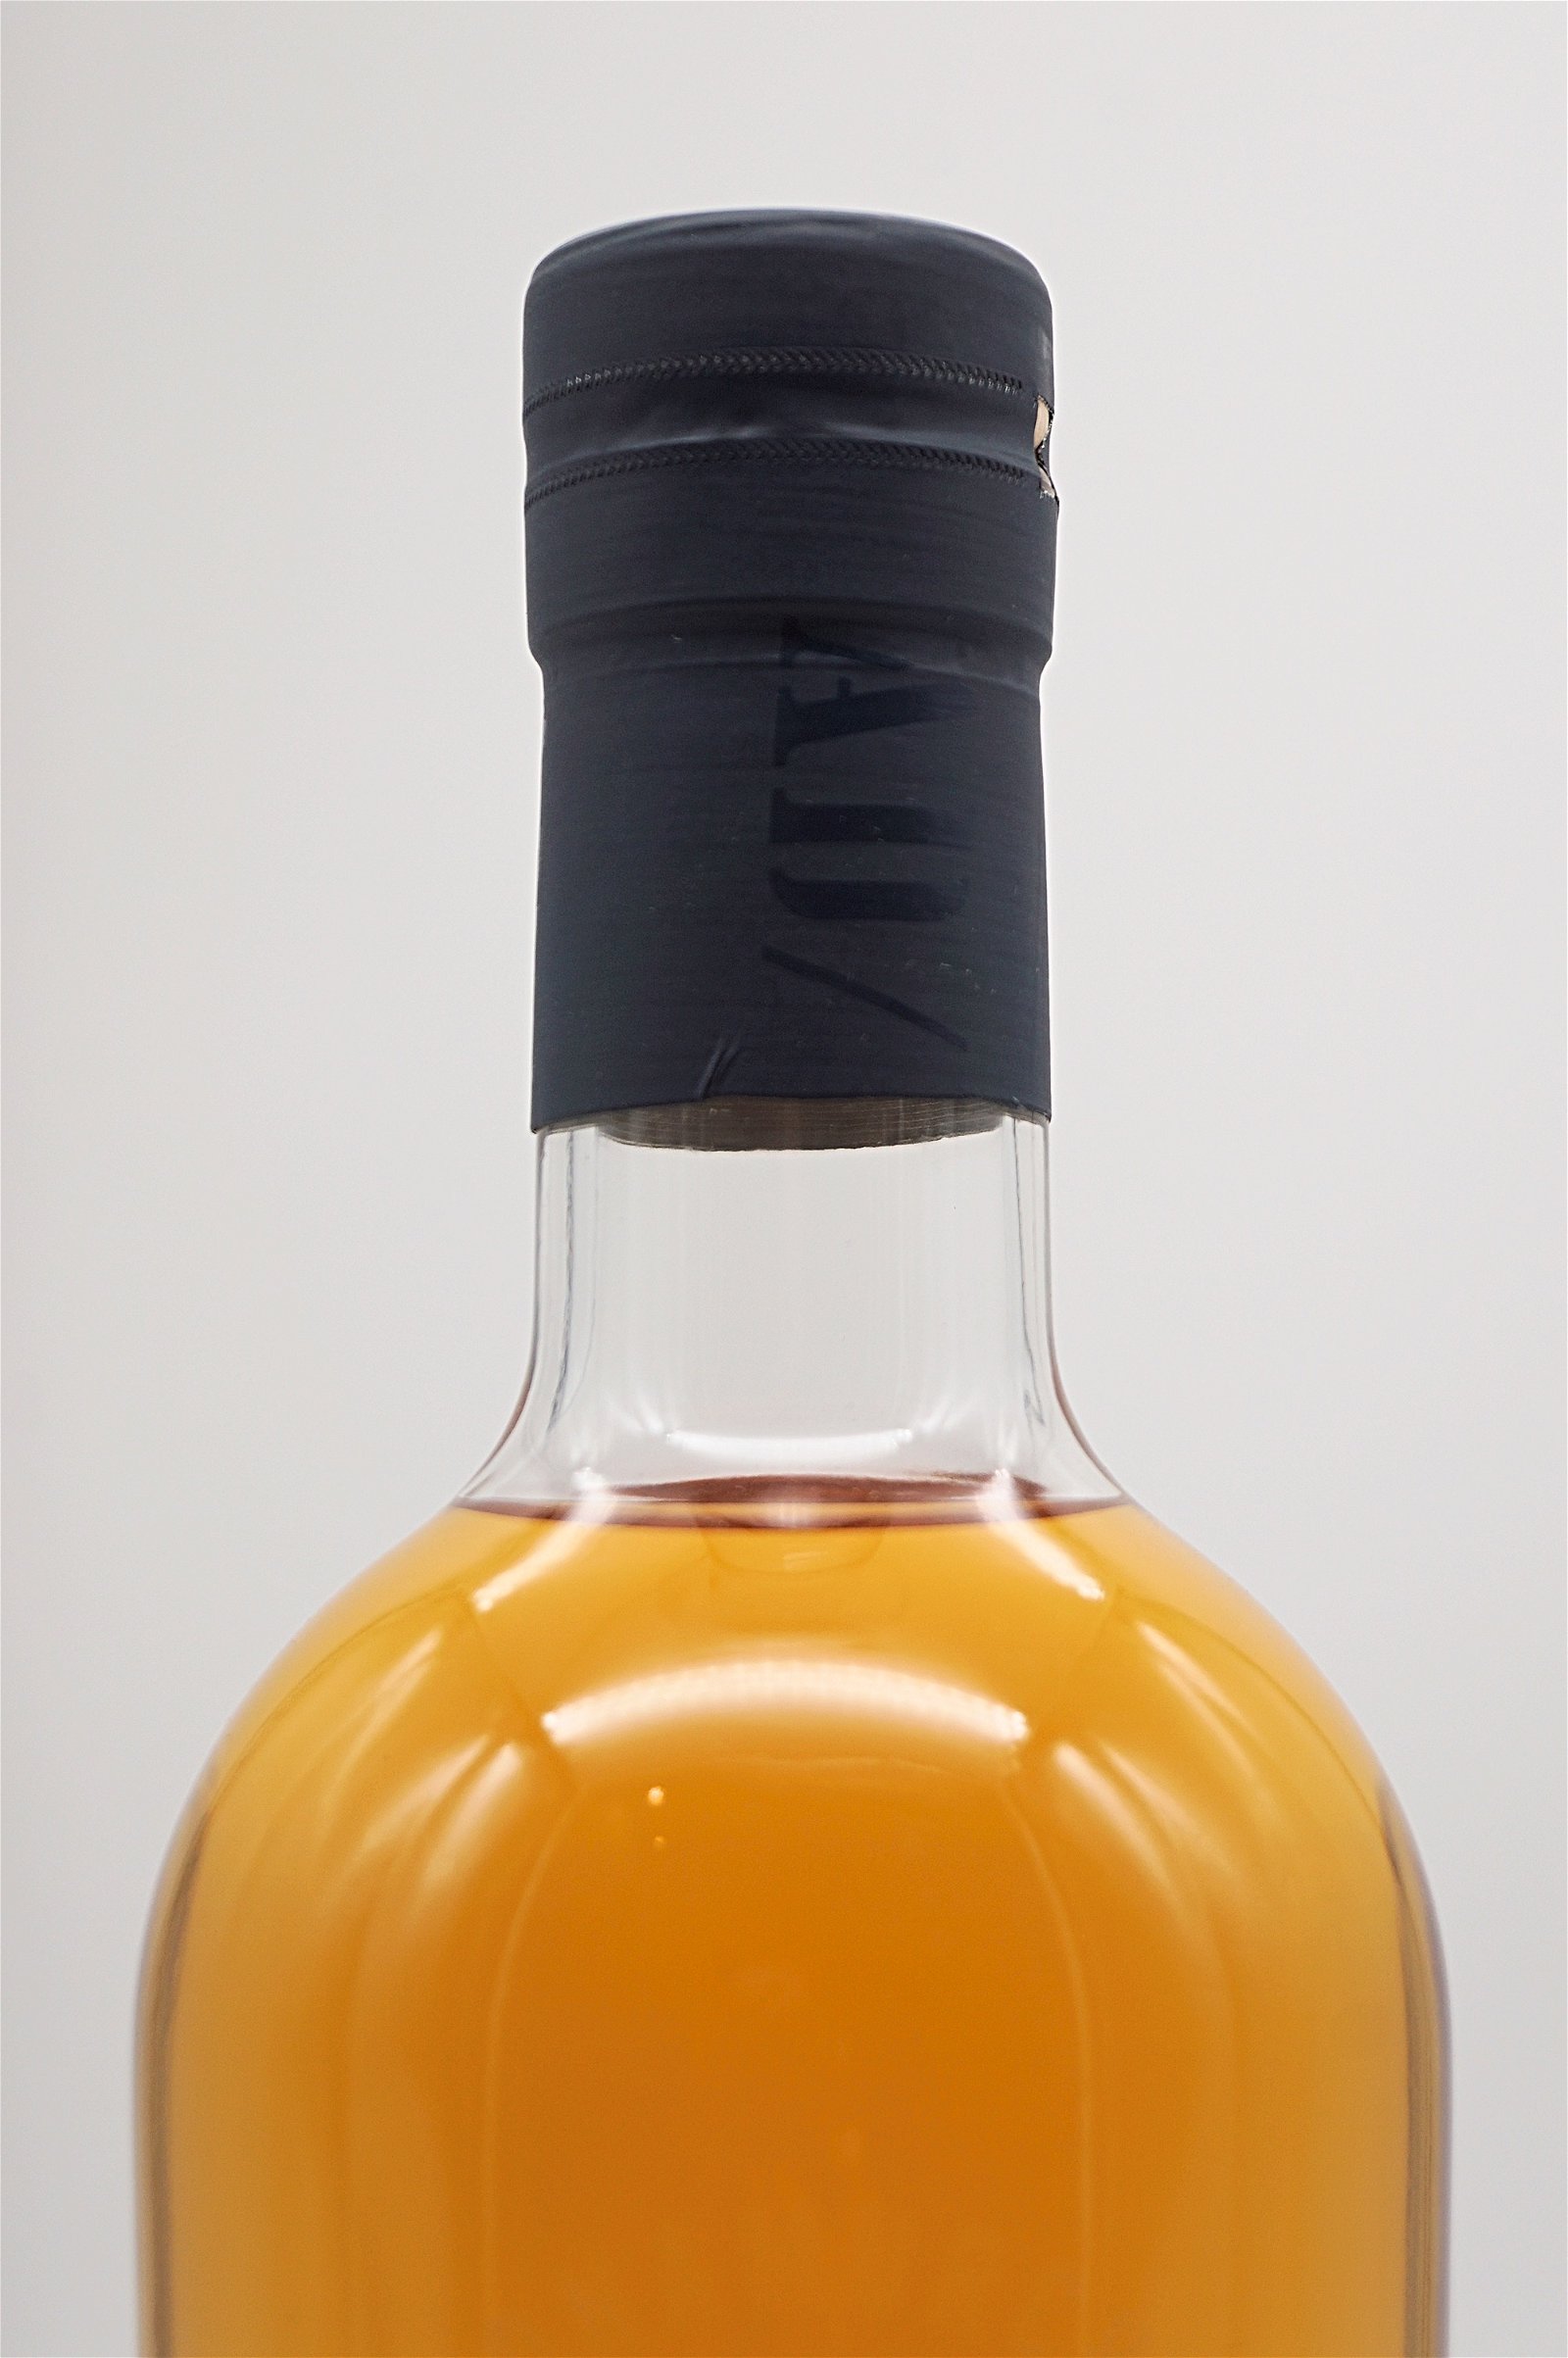 Ardnamurchan ADCB/04.22:02 Highland Single Malt Scotch Whisky